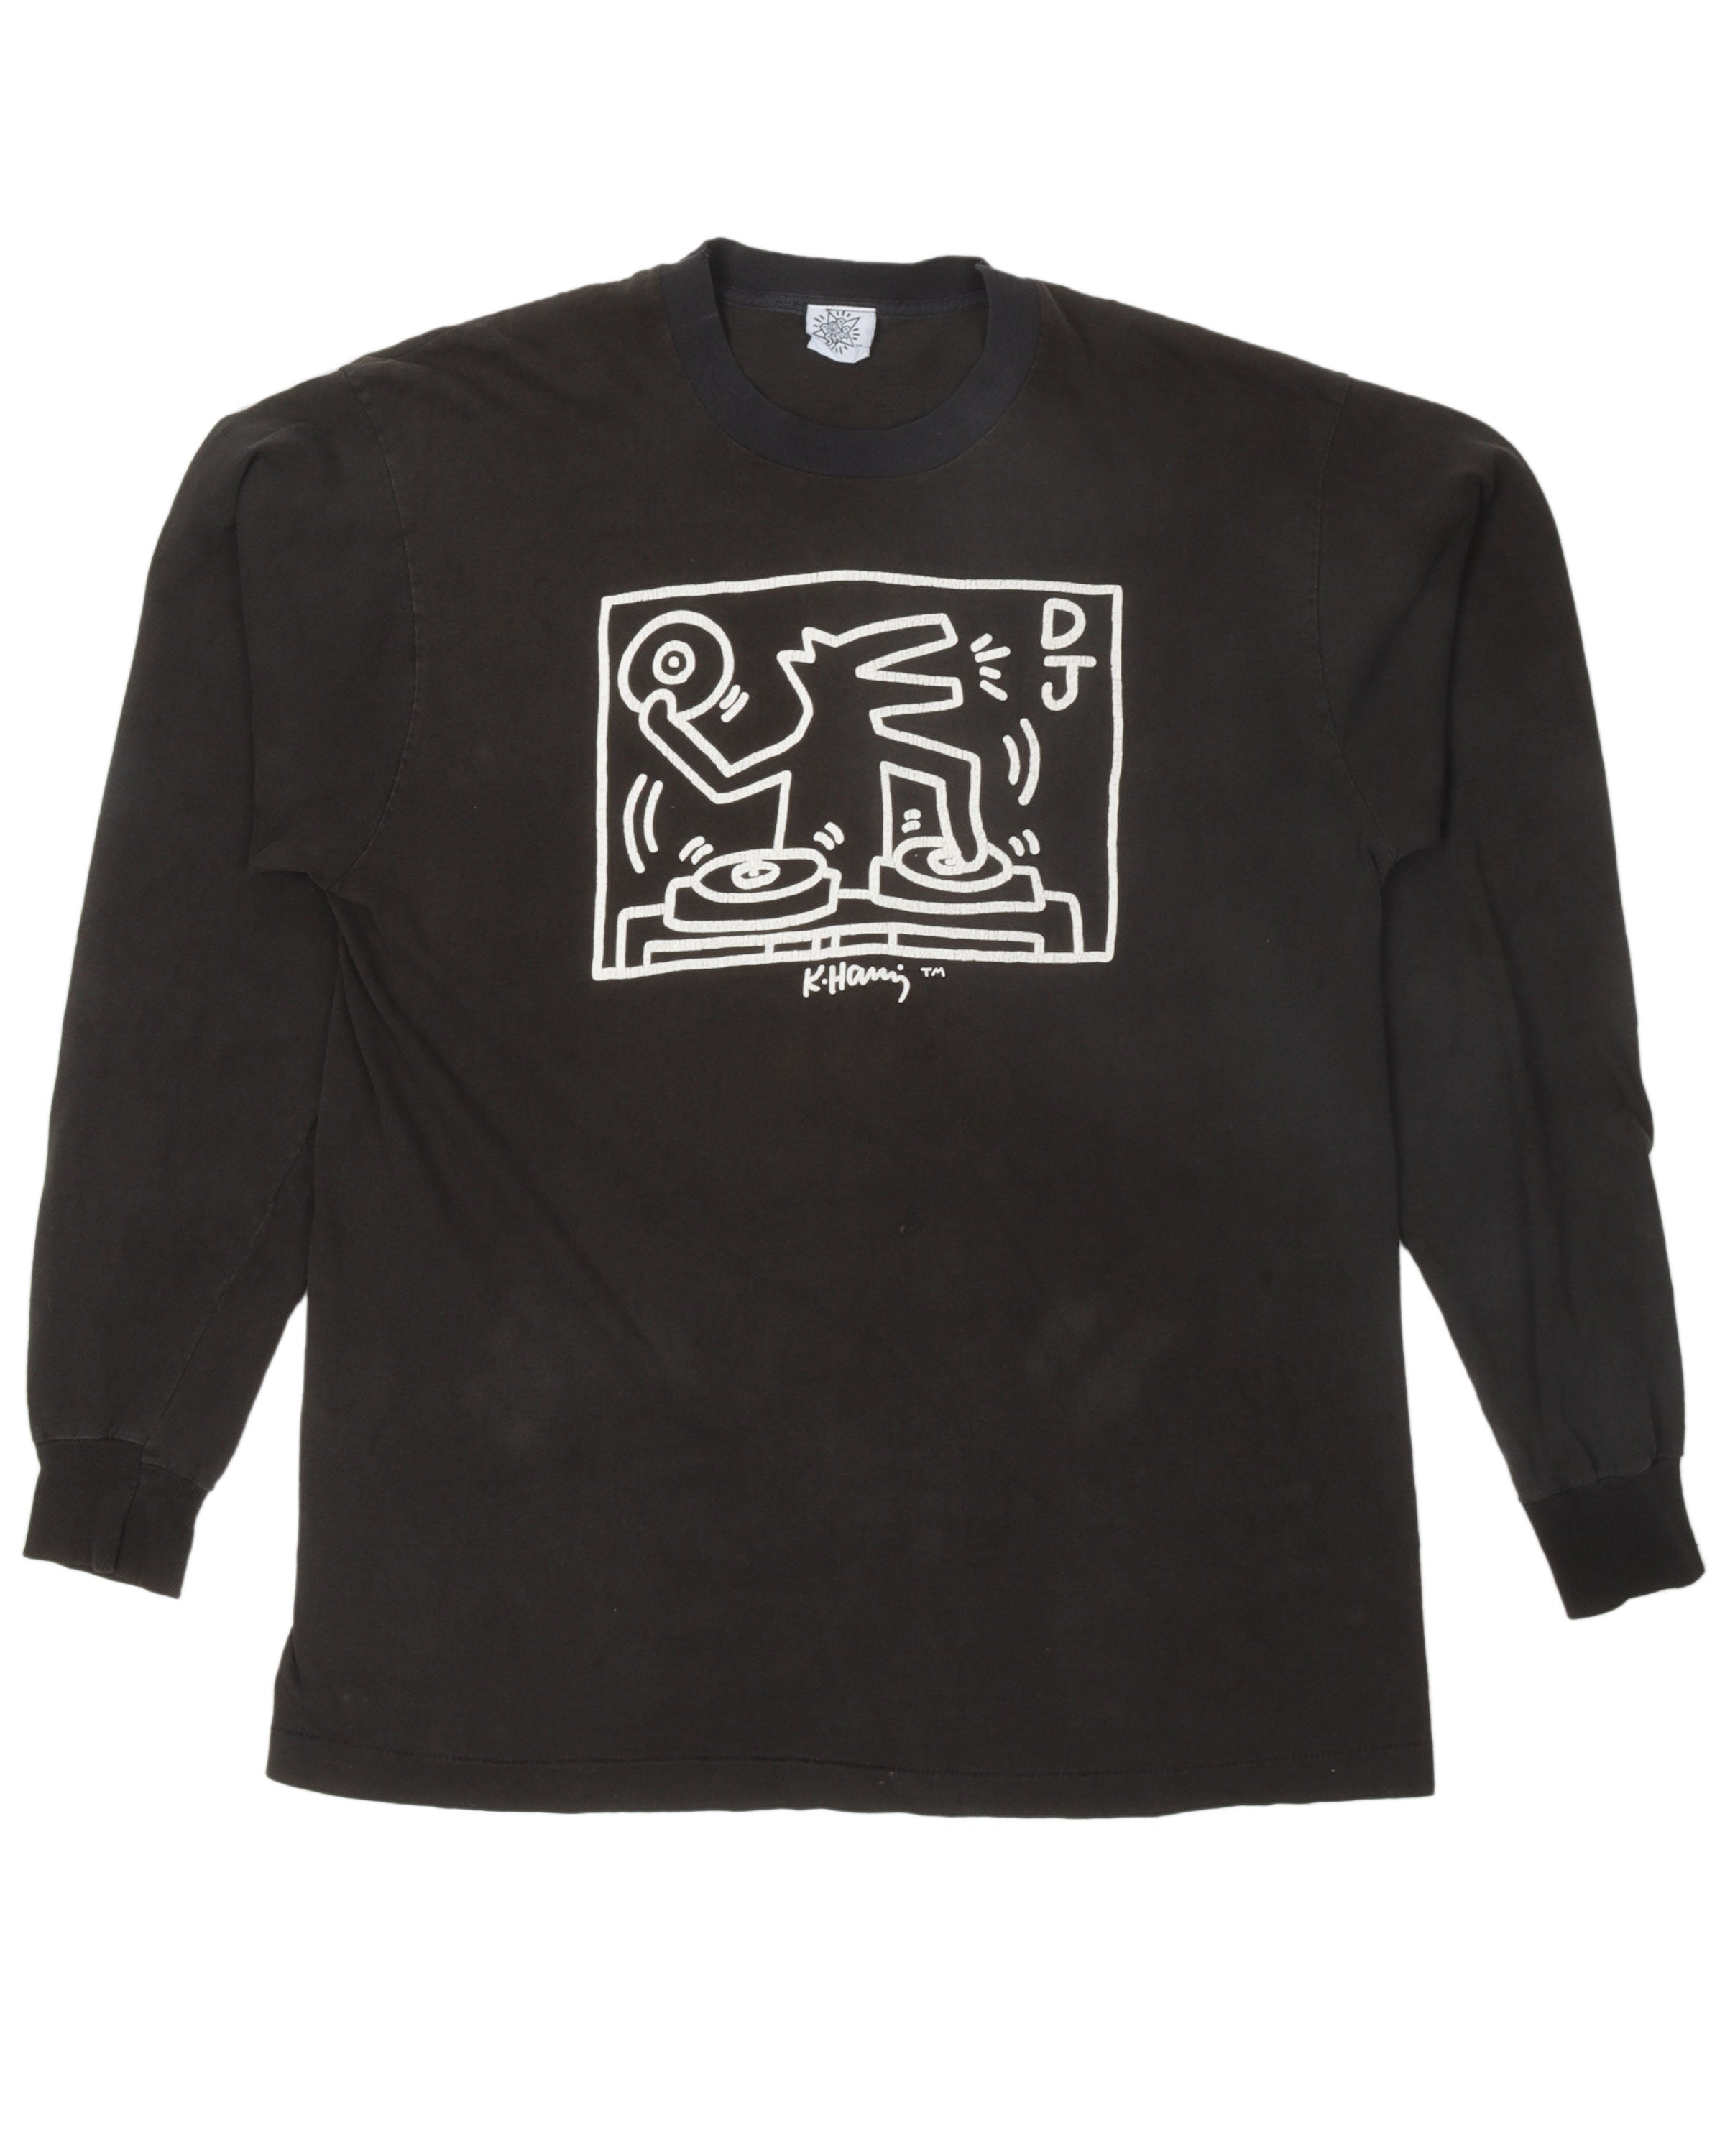 Keith Haring Pop Shop DJ Long Sleeve